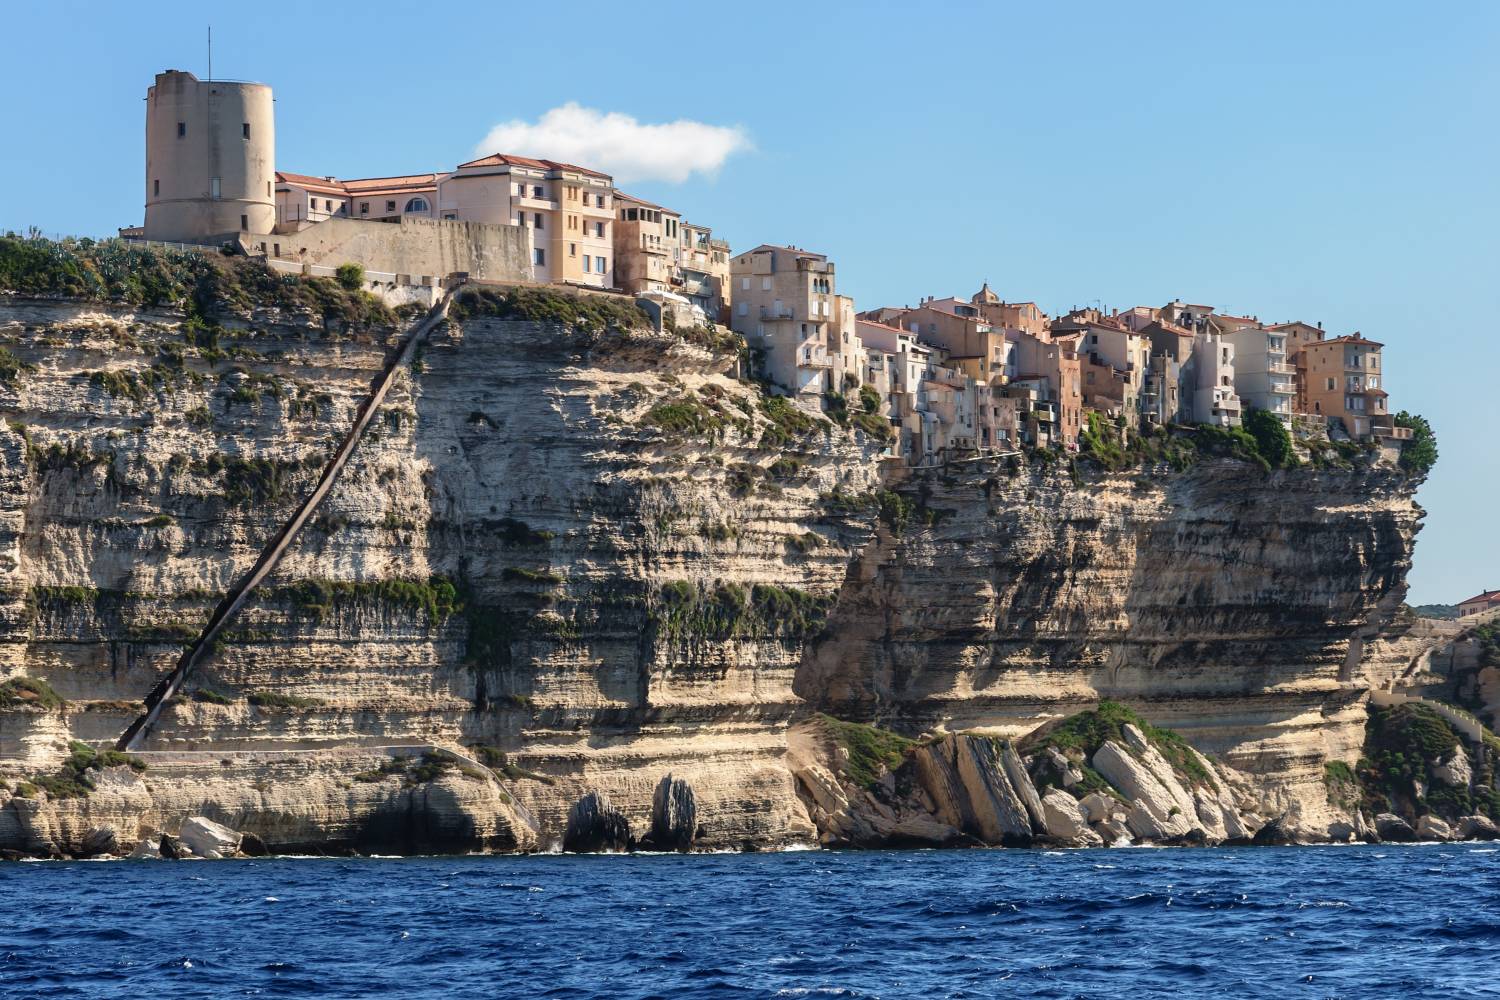 Areal view of Bonifacio cliffs - Take a Chef